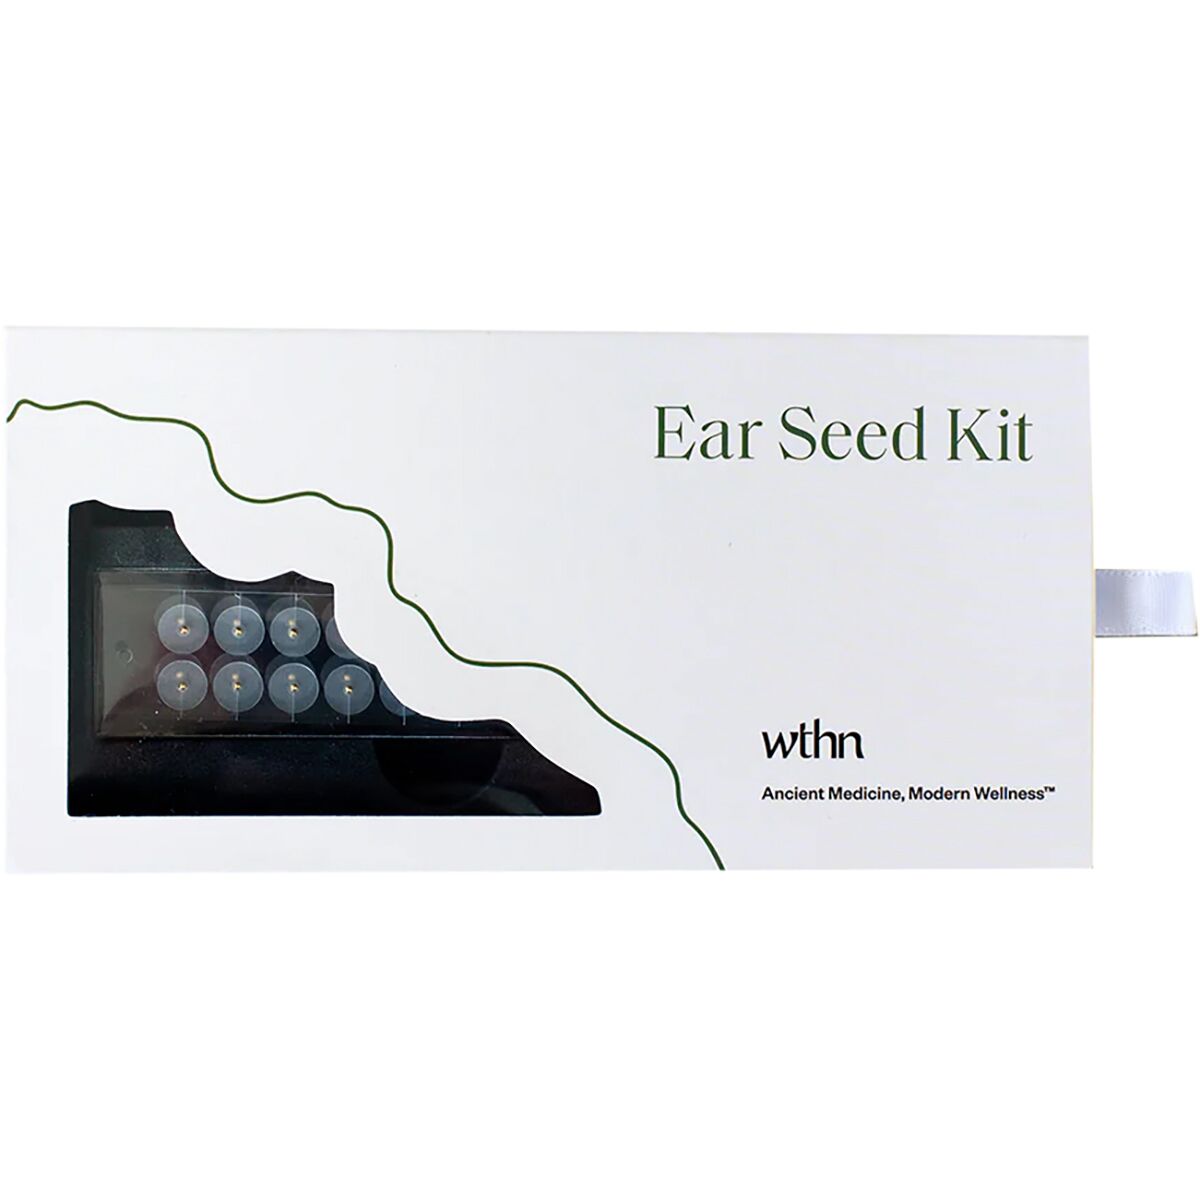 WTHN Gold Ear Seed Kit